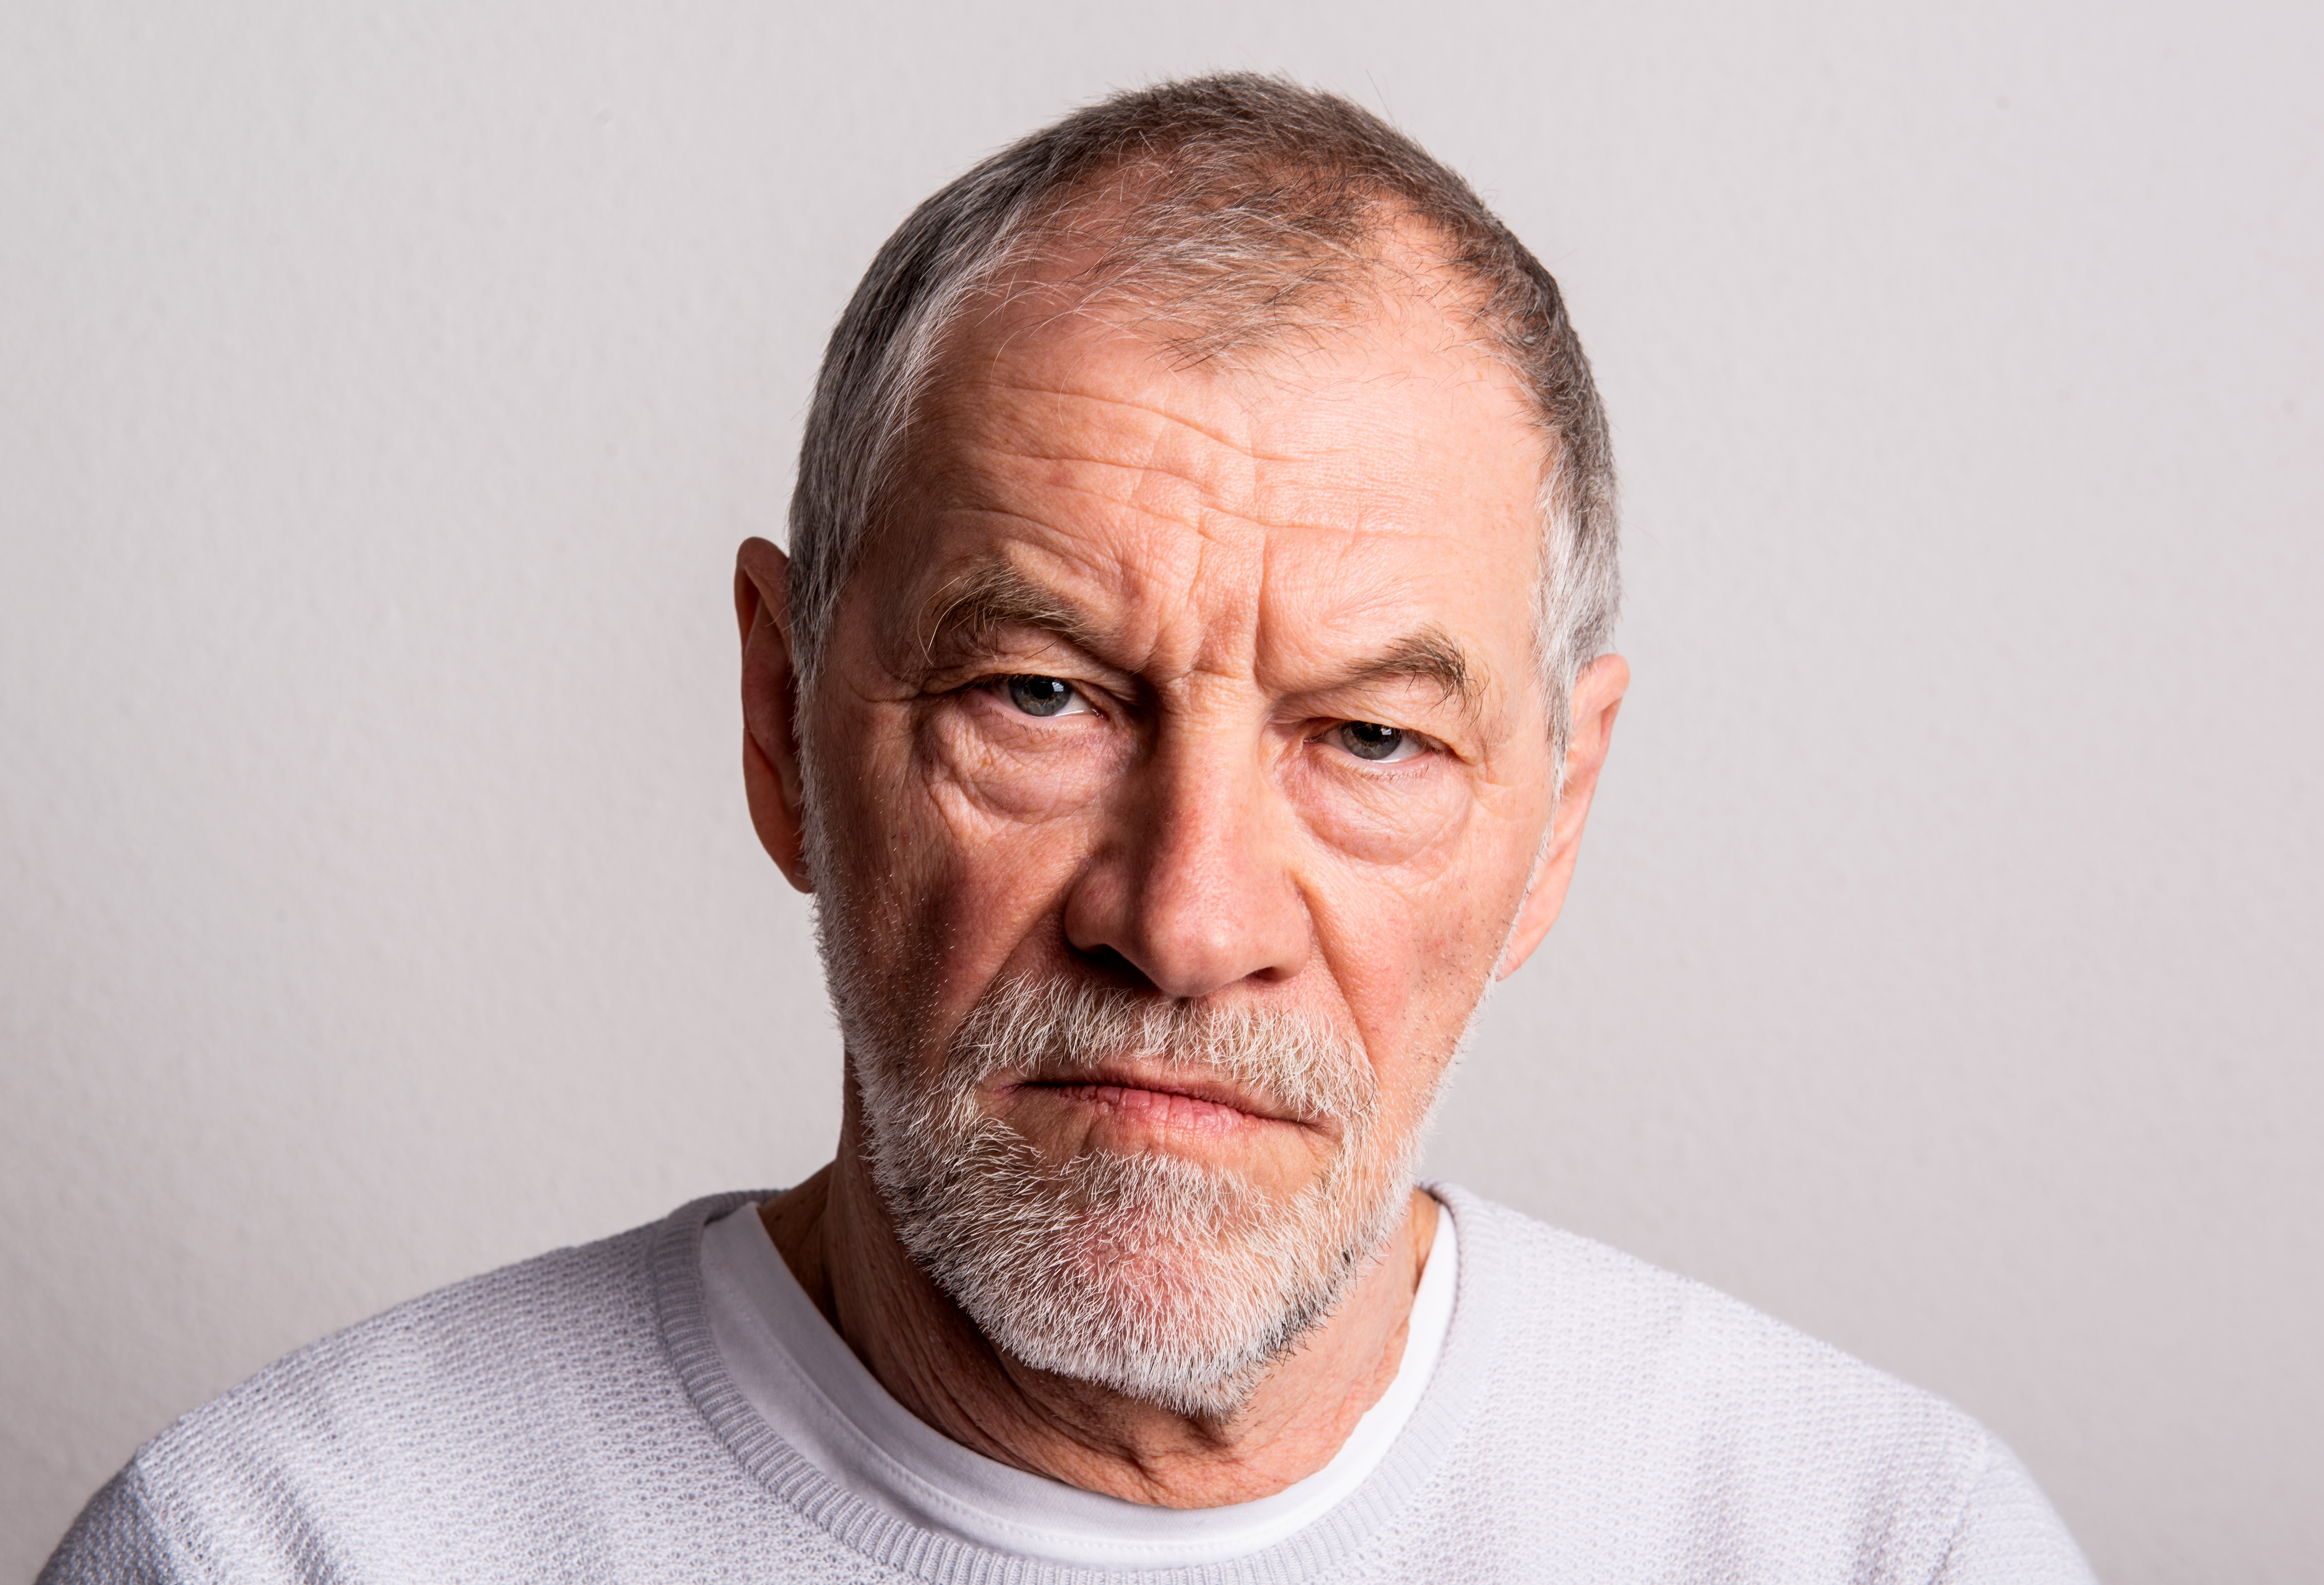 Portrait of a serious senior man | Source: Shutterstock